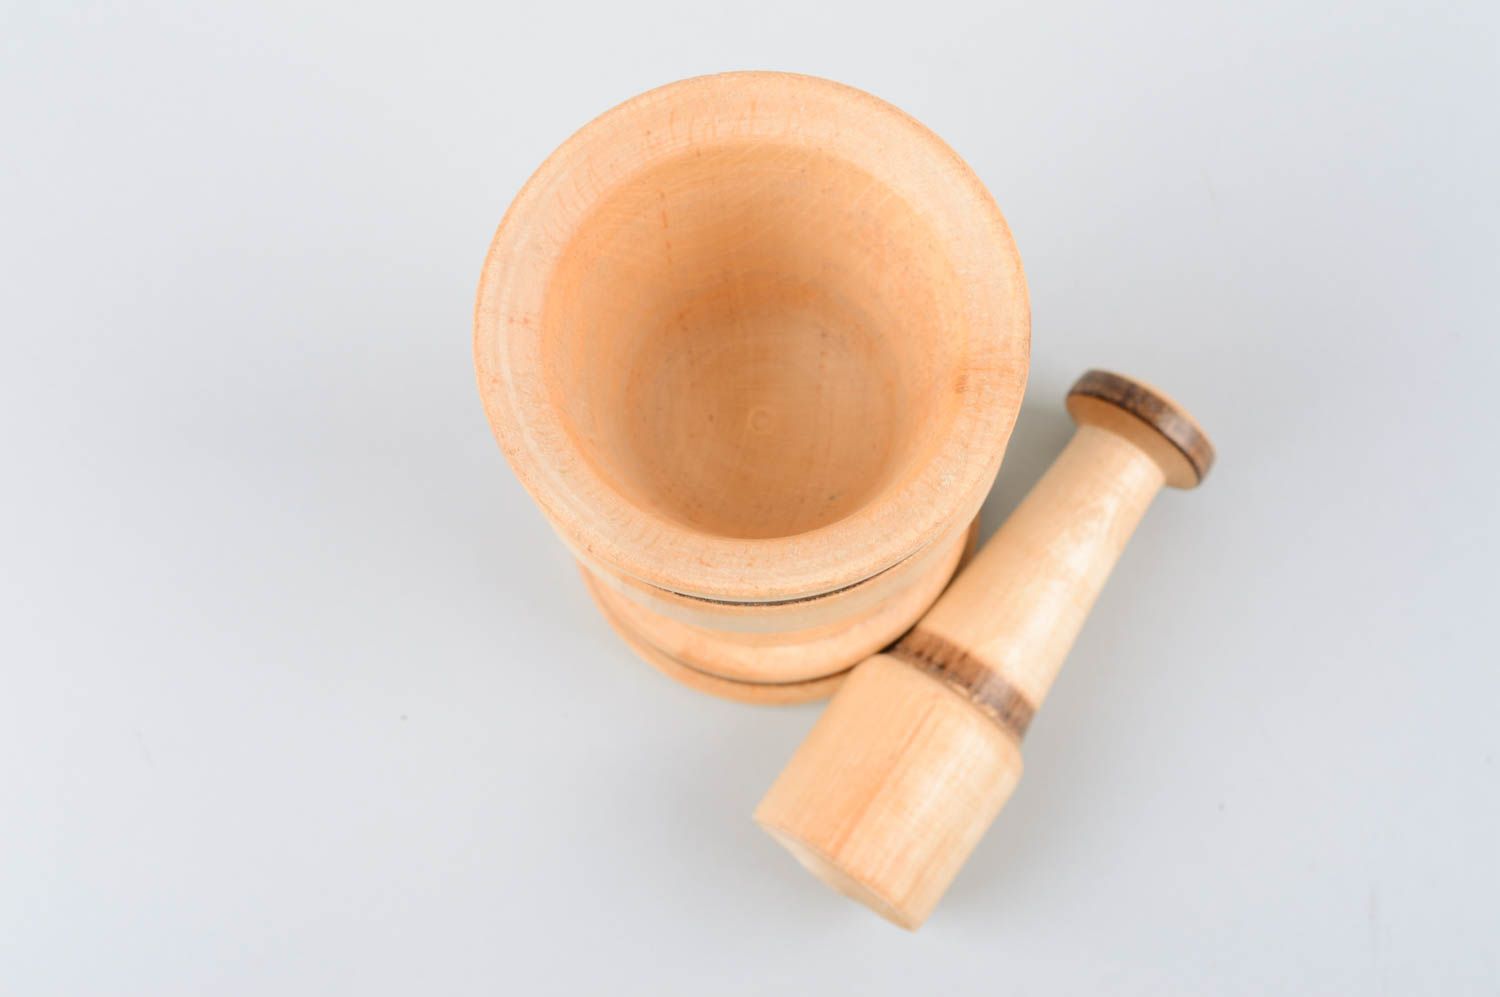 Handmade wooden mortar and pestle wooden hand spice grinder kitchen accessories photo 5